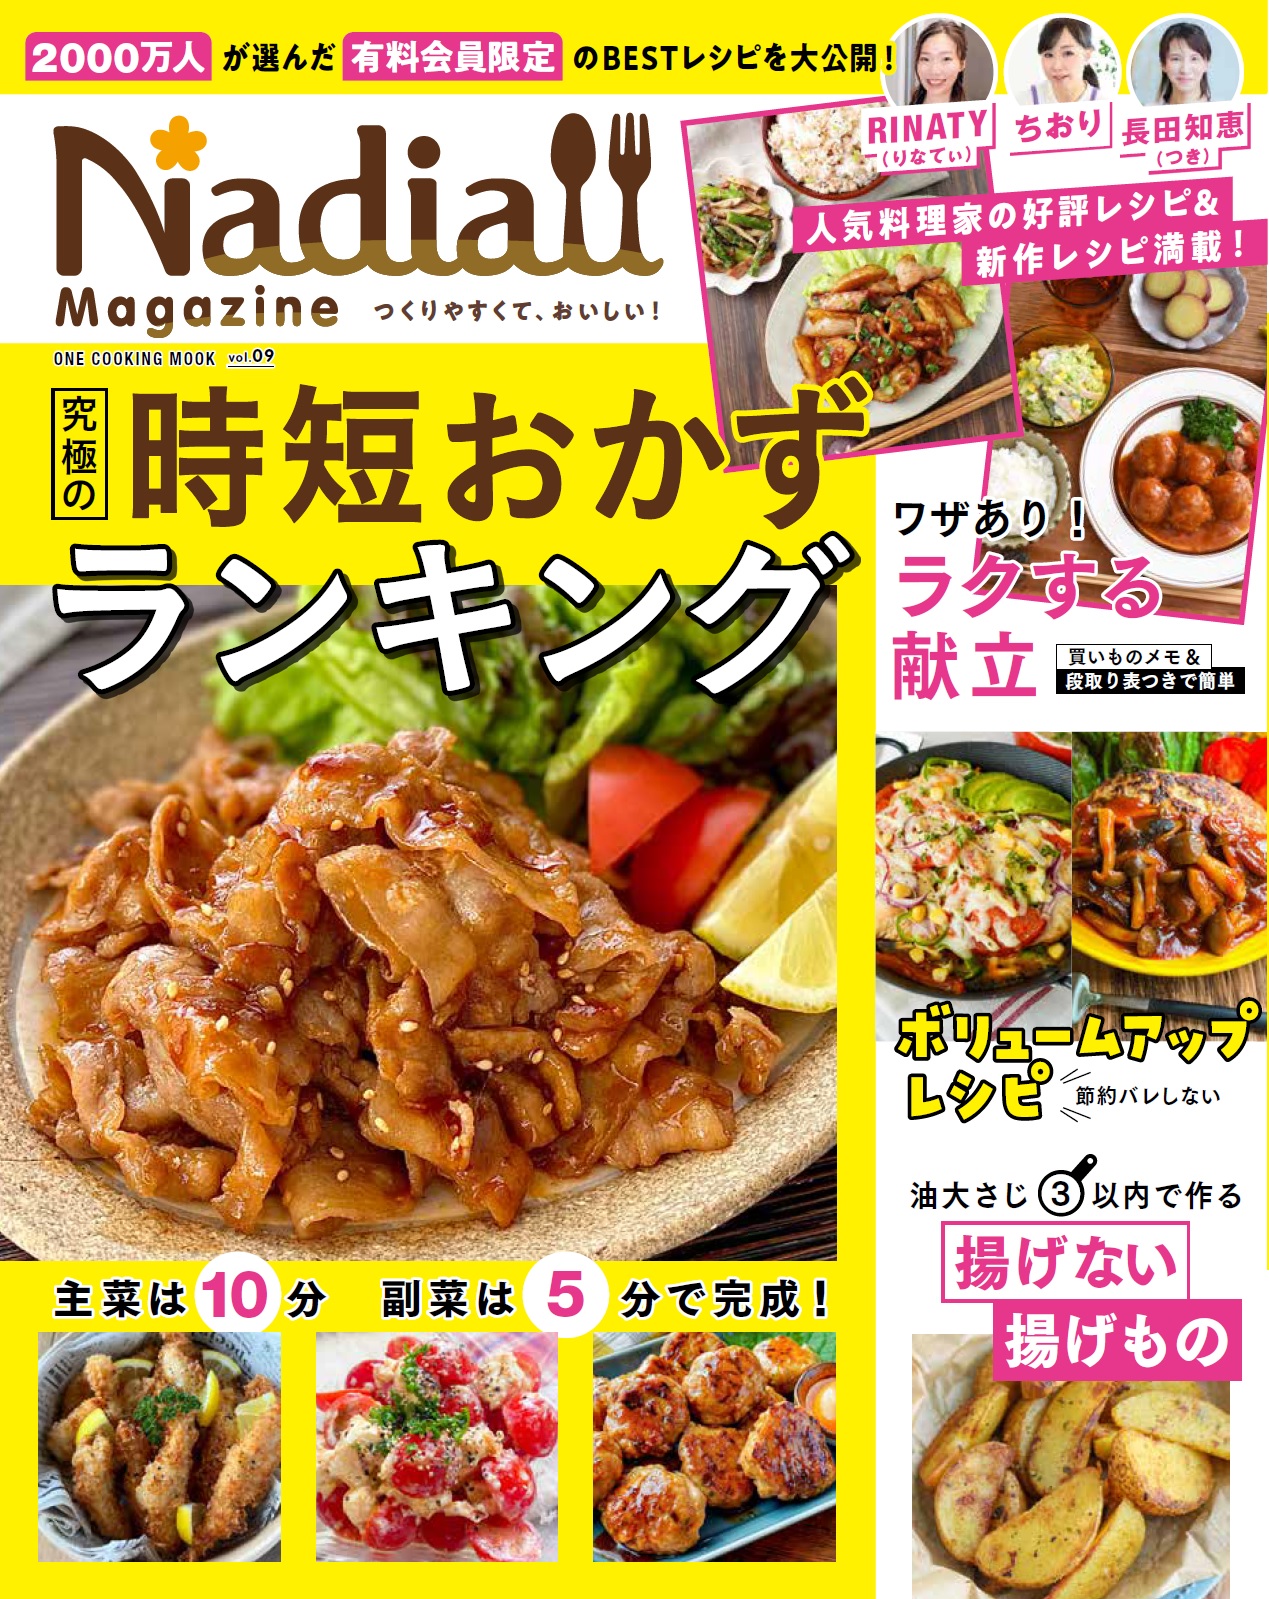 Nadia magazine vol.09